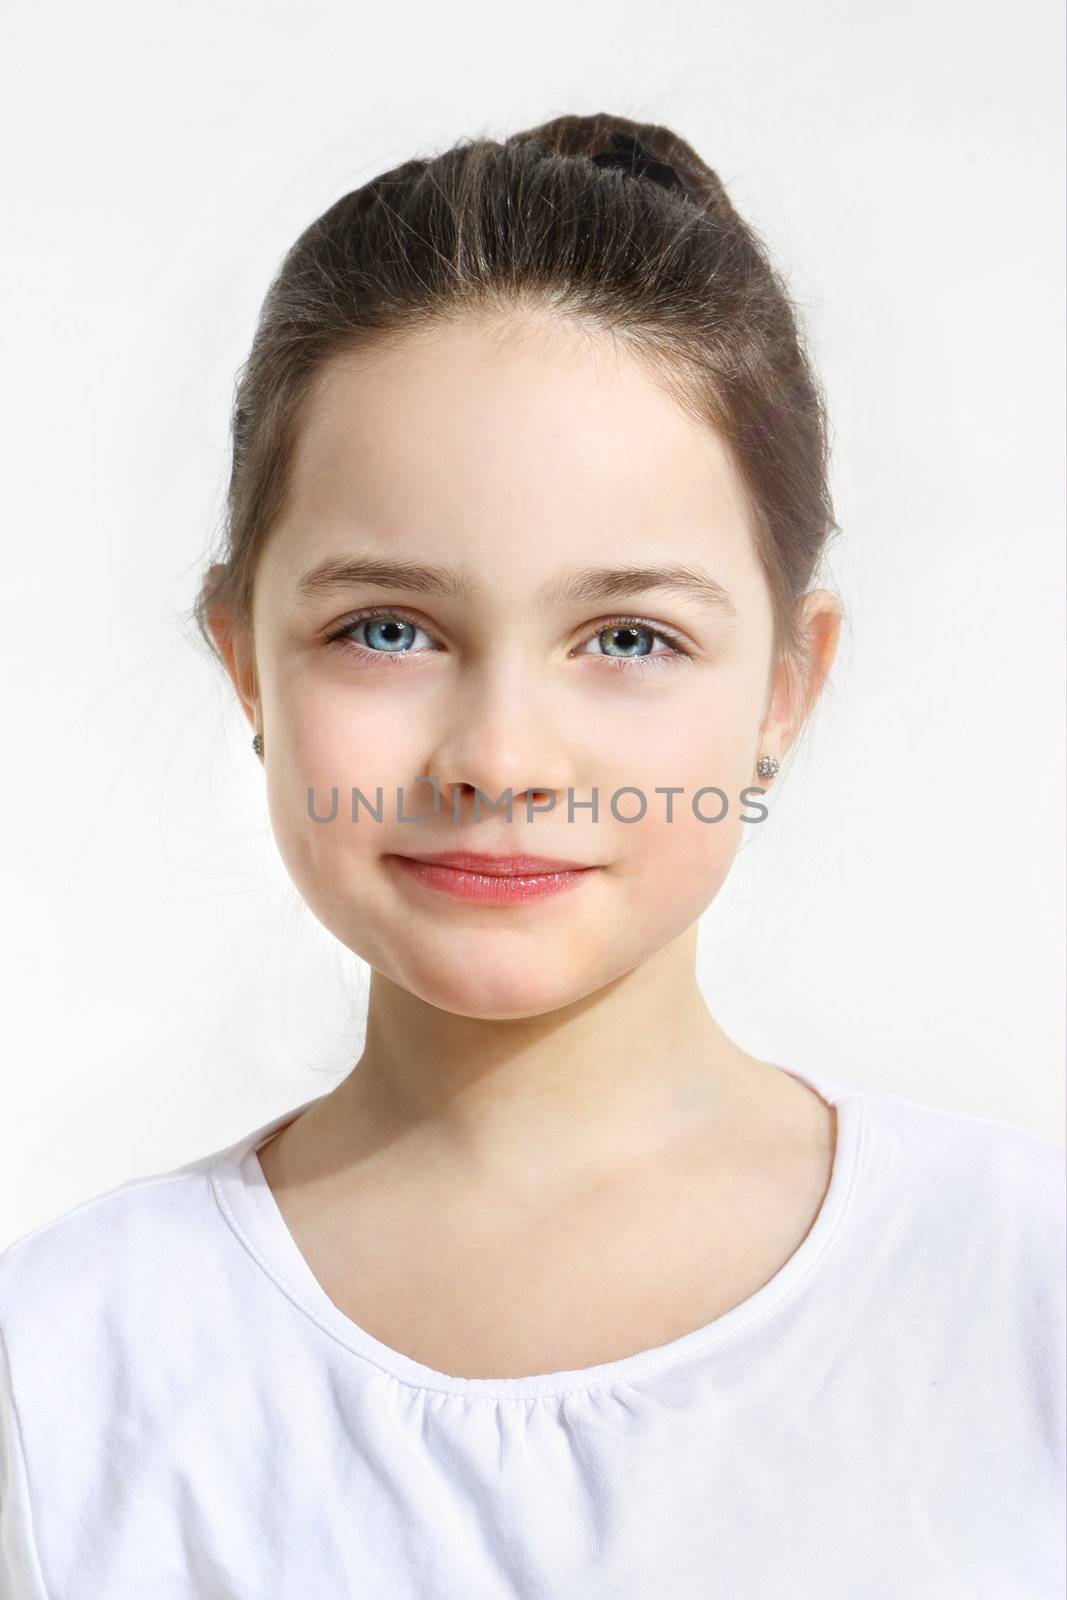 Blue-eyed girl on a white background by robert_przybysz